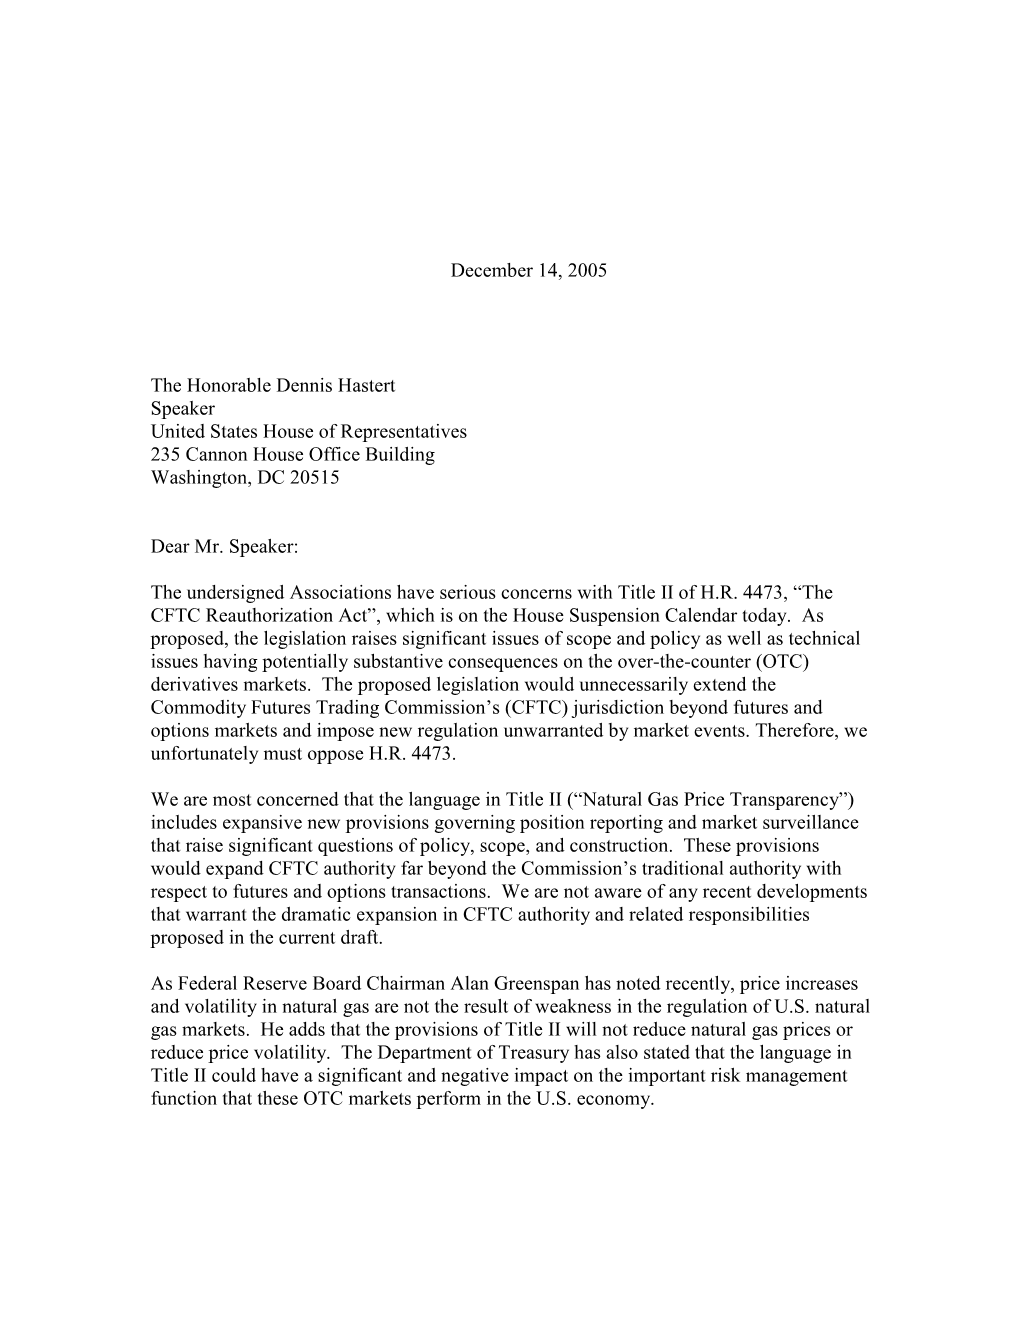 Joint Industry Letter to Speaker Hastert on HR 4473 The